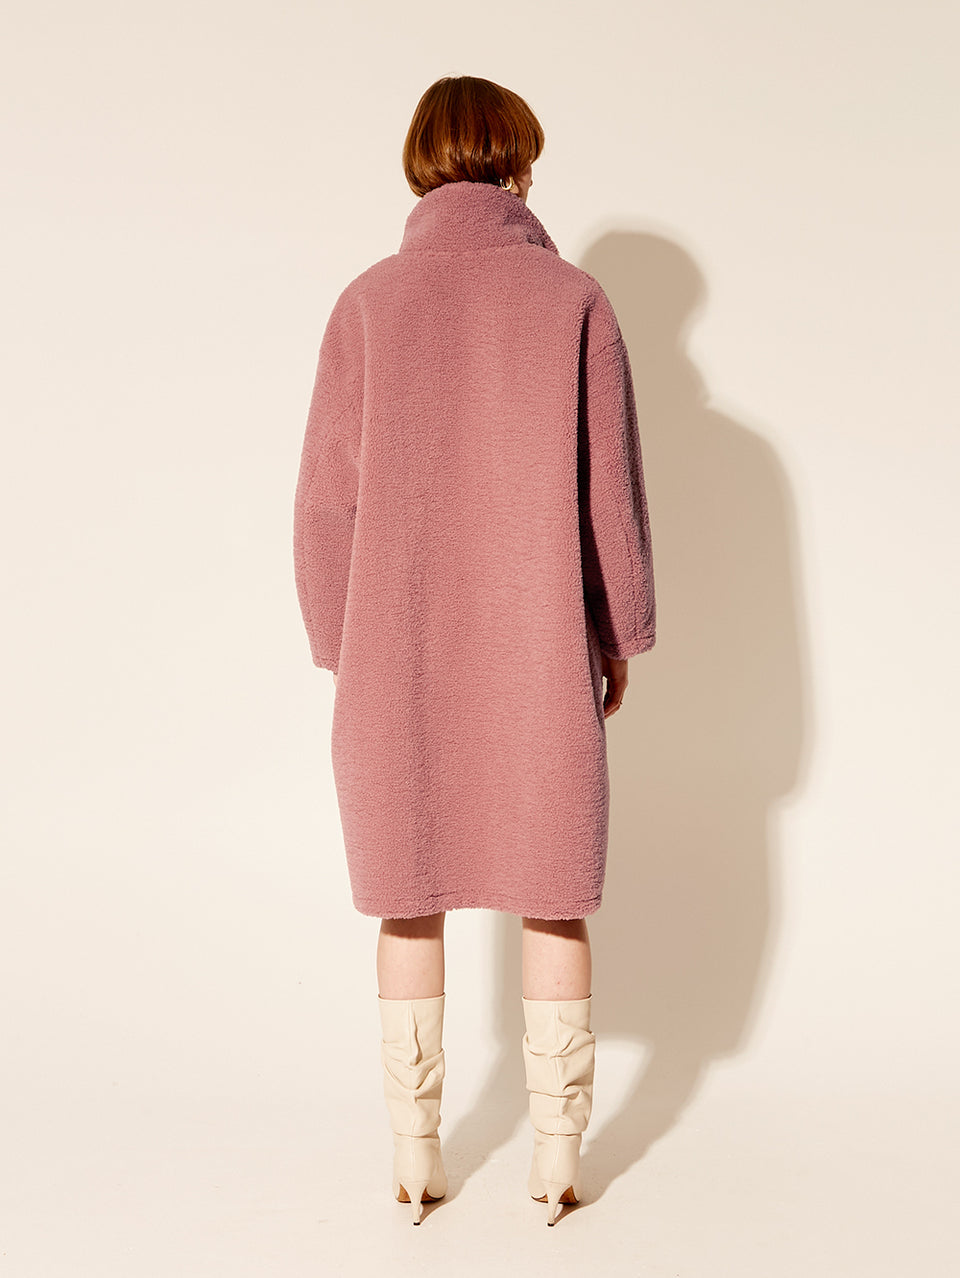 Clara Coat KIVARI | Model wears pink fluffy coat back view